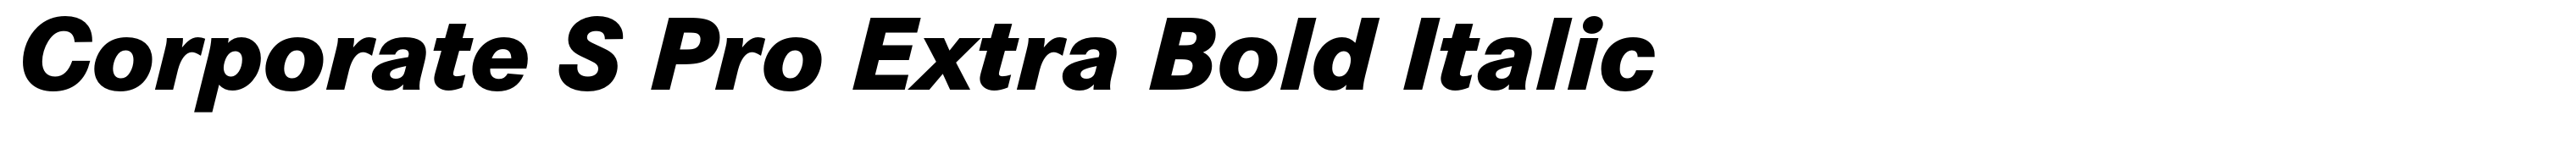 Corporate S Pro Extra Bold Italic